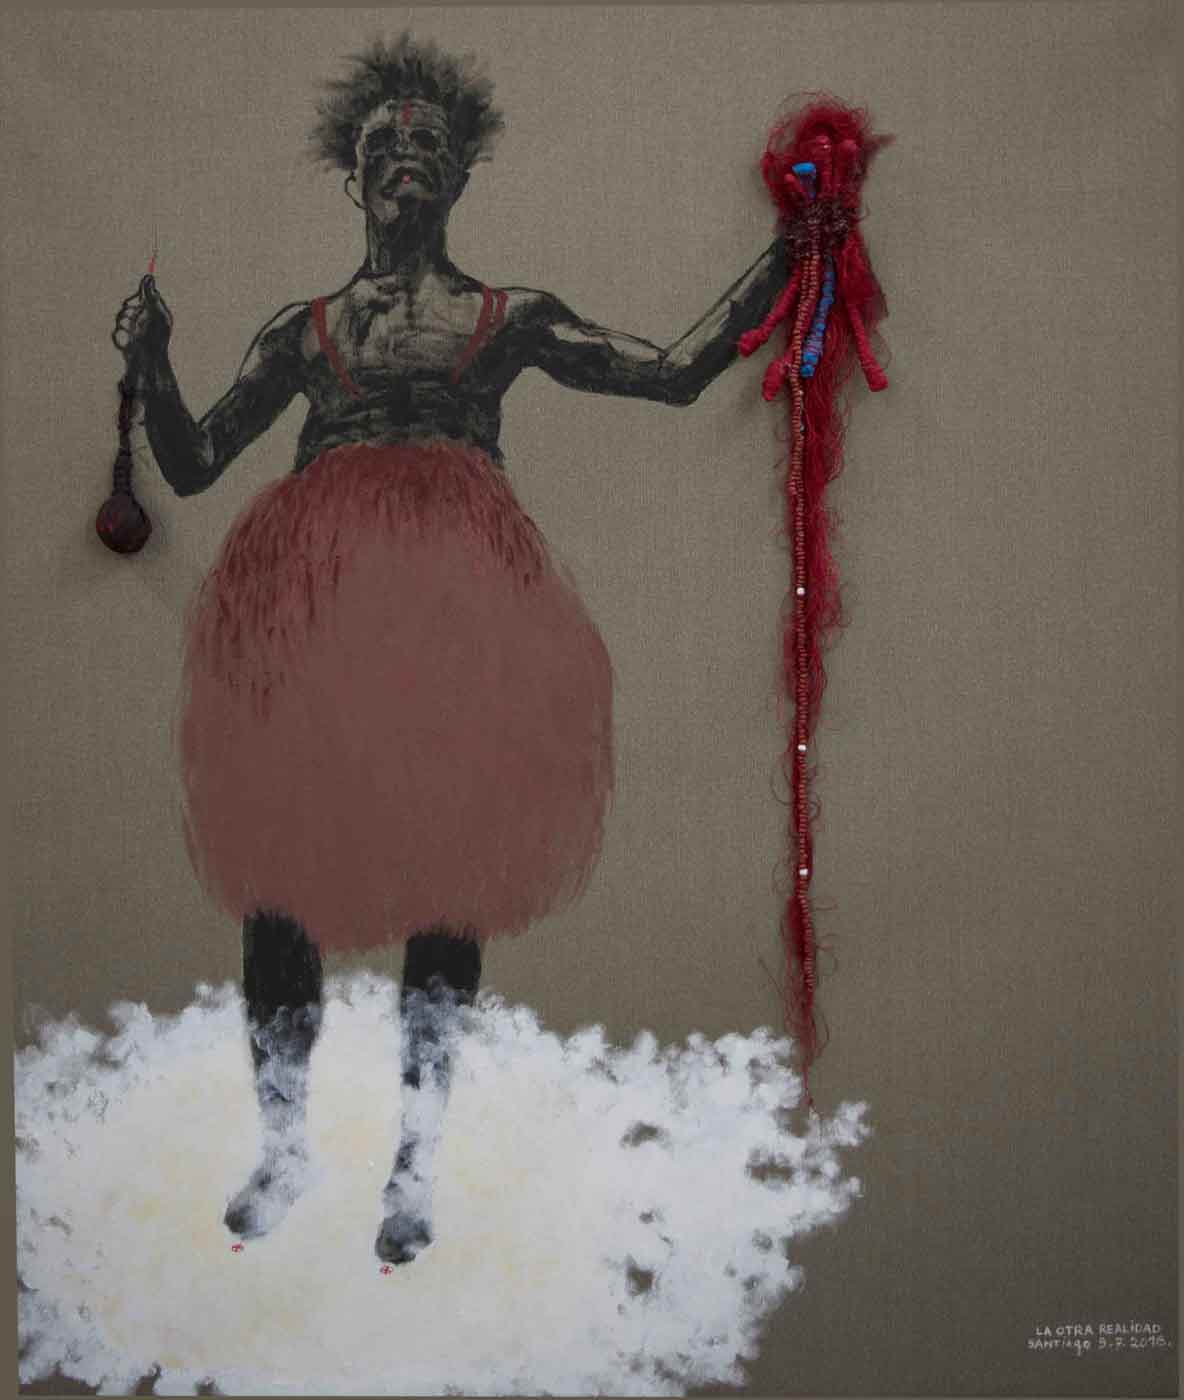 Obra "La otra realidad", del artista cubano Santiago Rodríguez Olazábal.